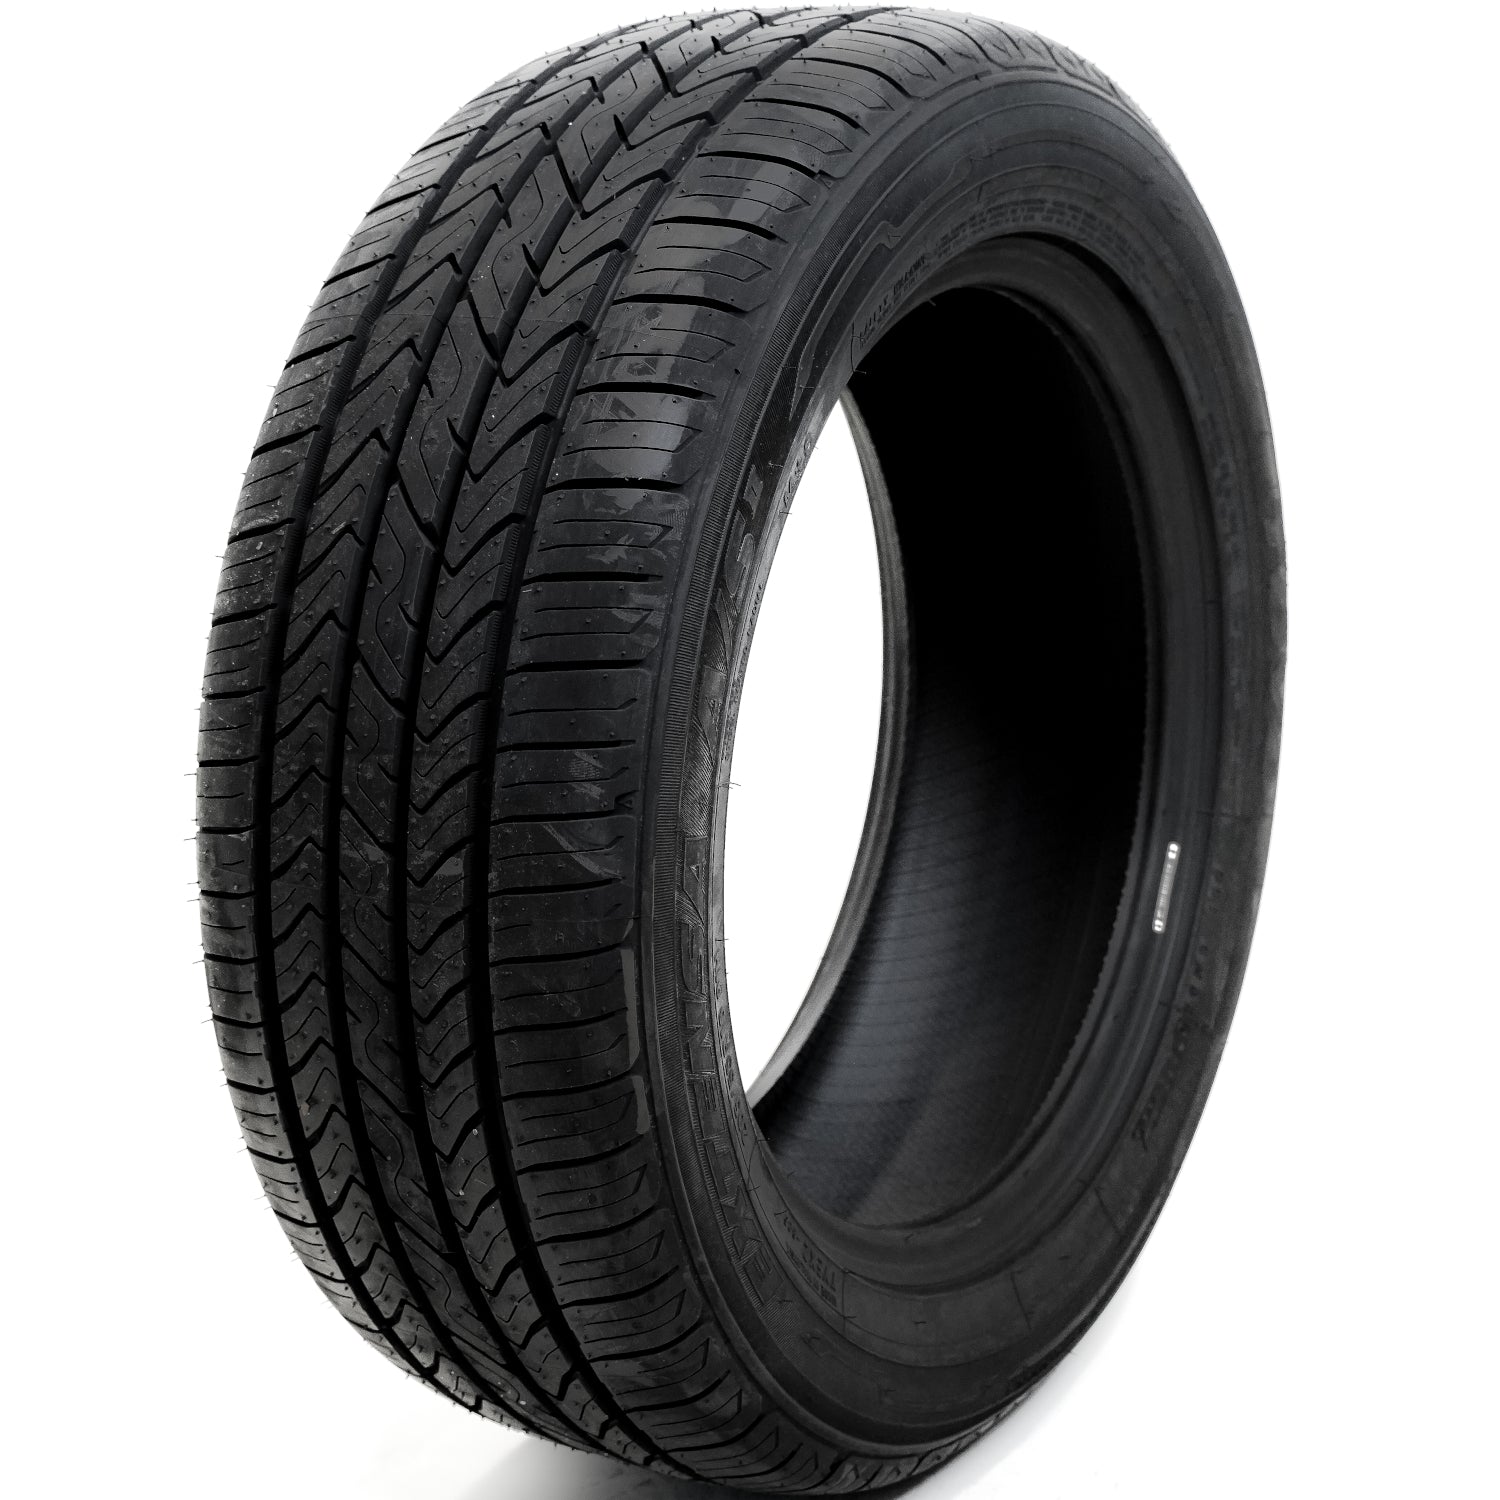 TOYO TIRES EXTENSA A/S II P215/65R15 95T (26X8.5R 15) Tires